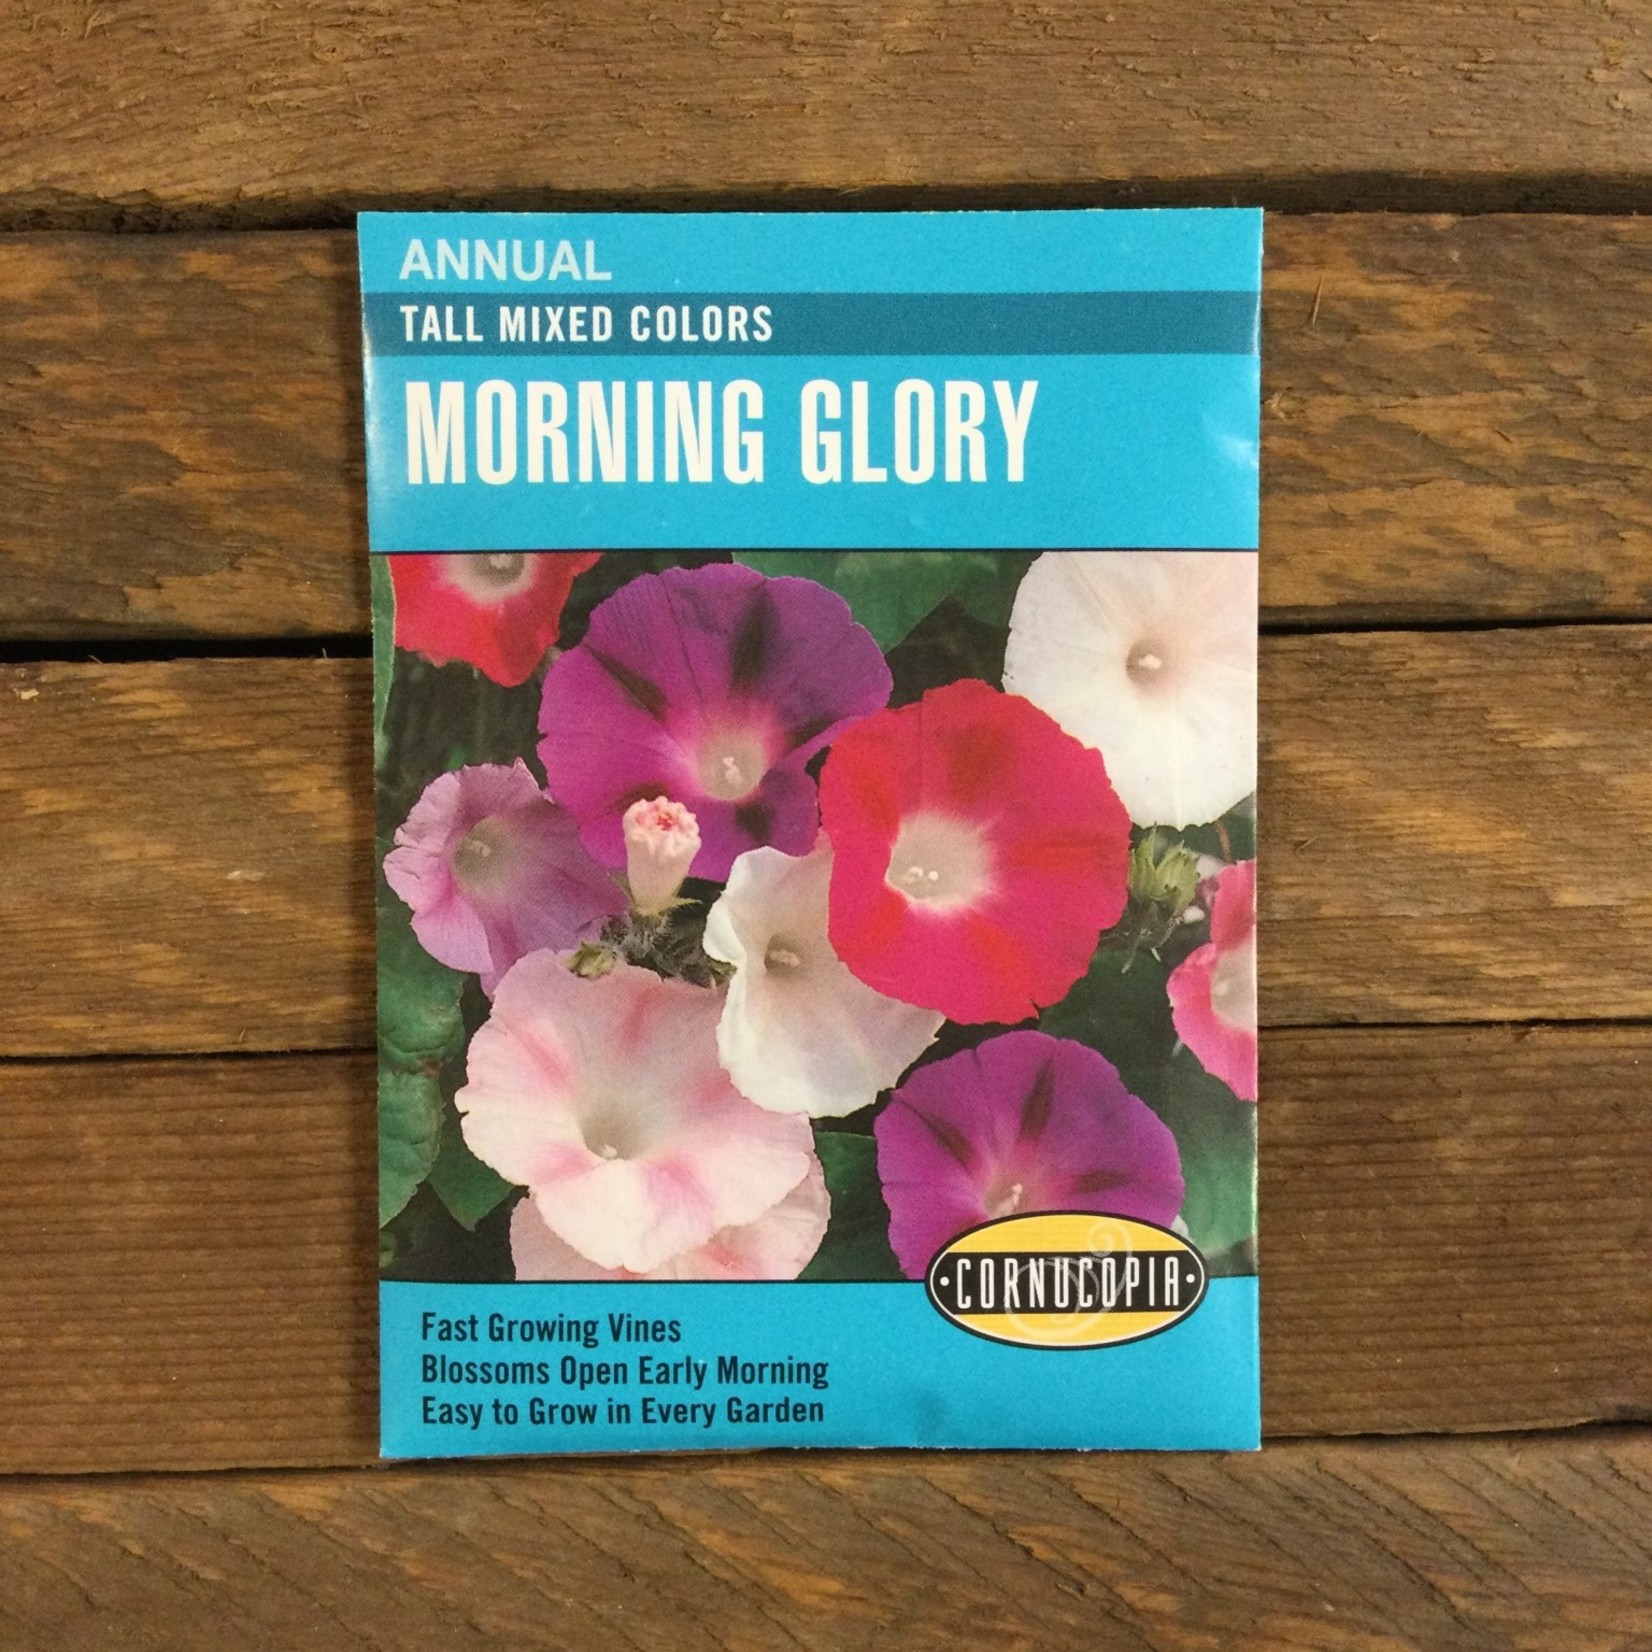 Cornucopia Morning Glory - Morning Glory Tall Mixed Colors